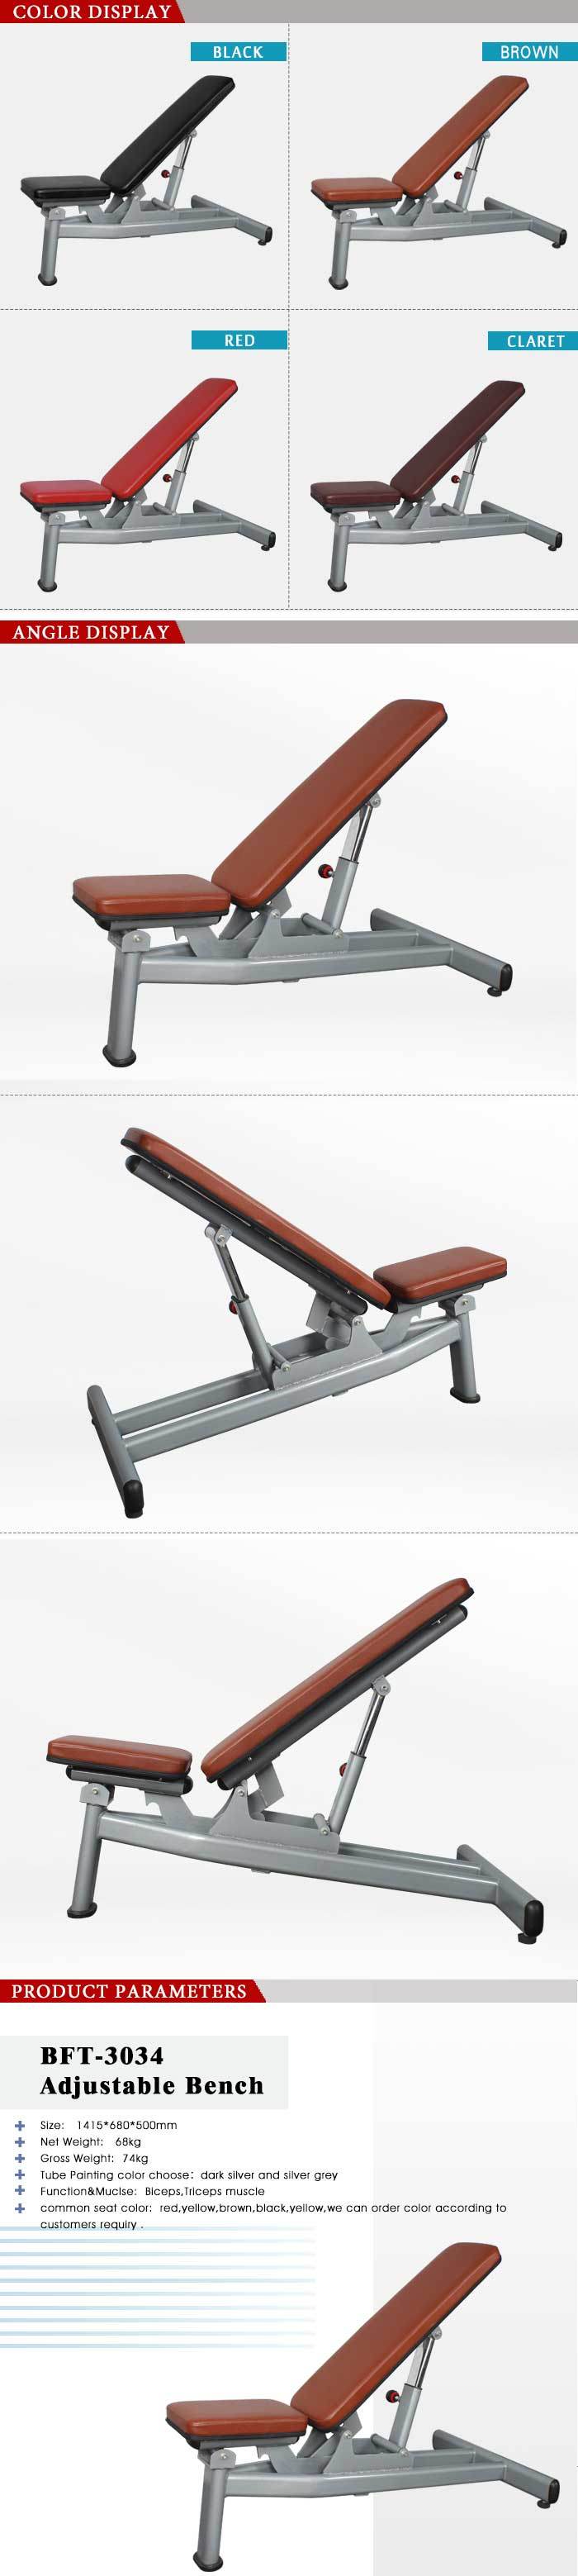 Precor Gym Exercise Equipment Adjustable Bench